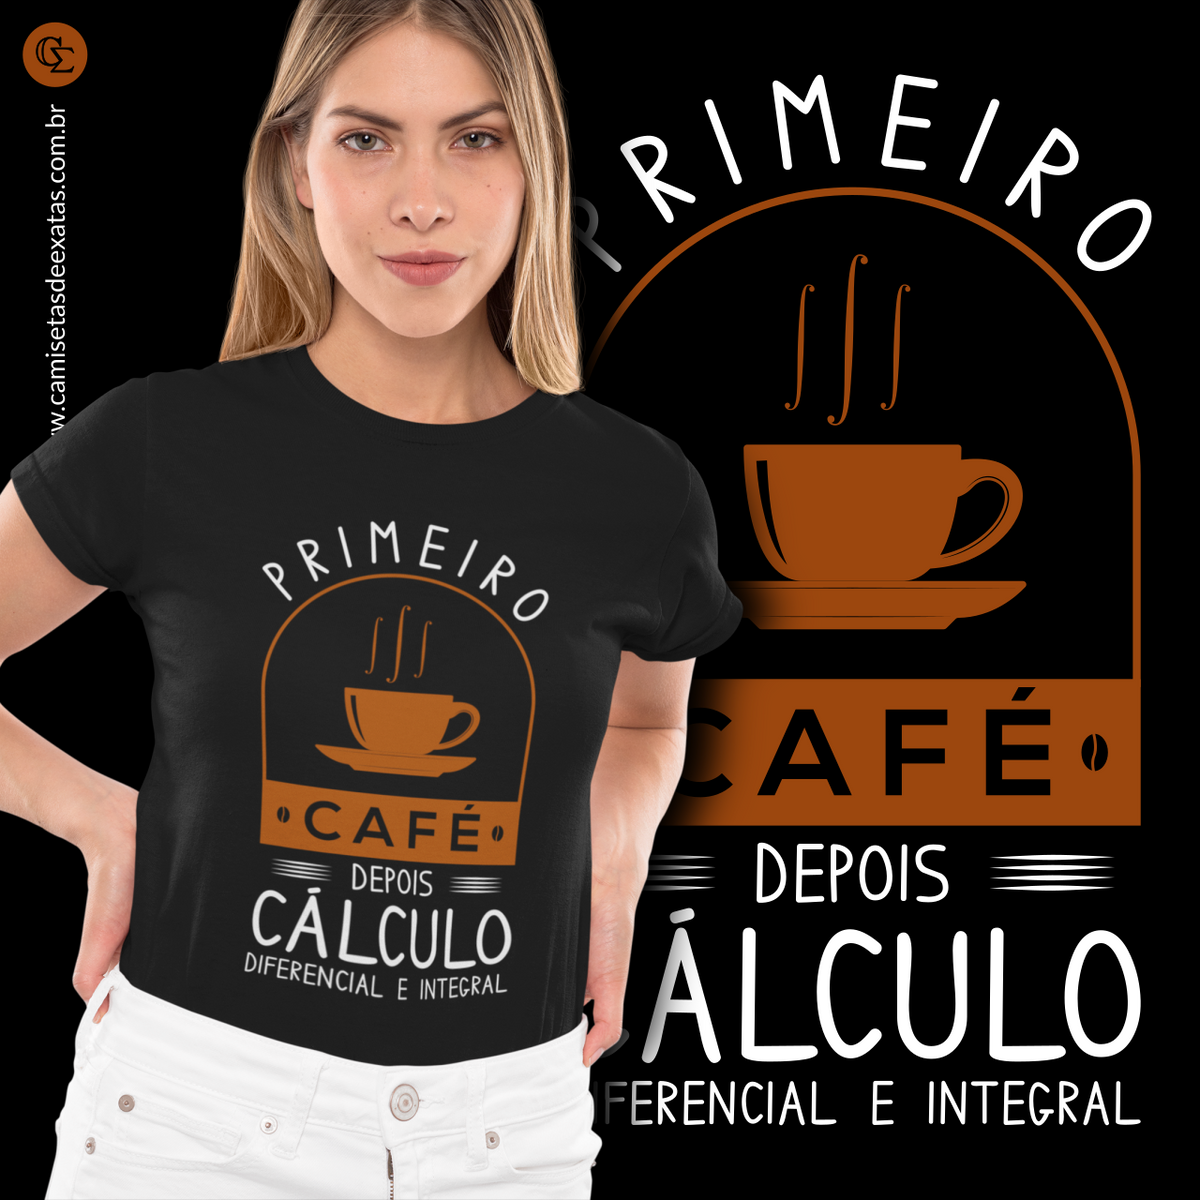 Nome do produto: PRIMEIRO CAFÉ DEPOIS CÁLCULO